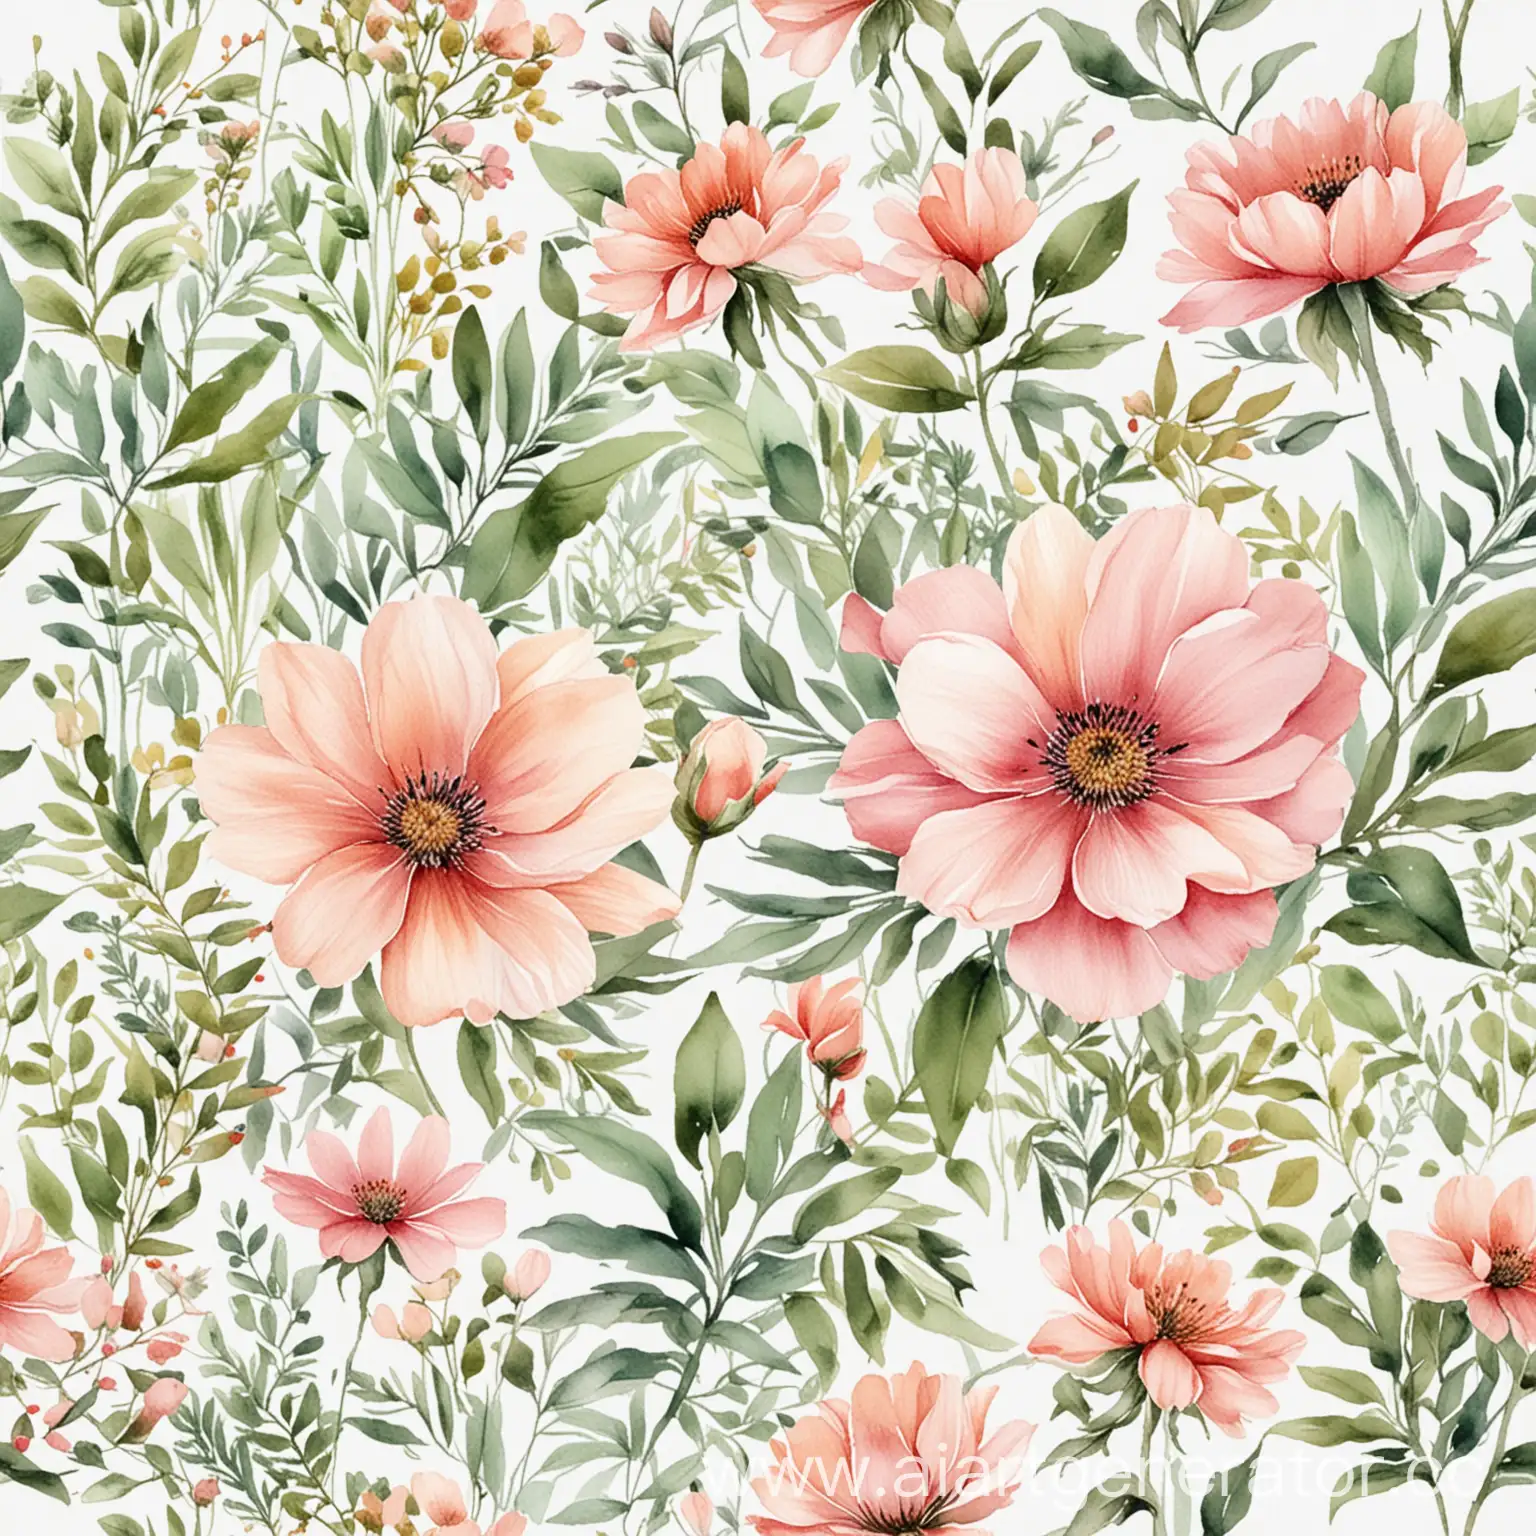 Elegant-Watercolor-Floral-Arrangement-Delicate-Blossoms-in-Serene-Harmony